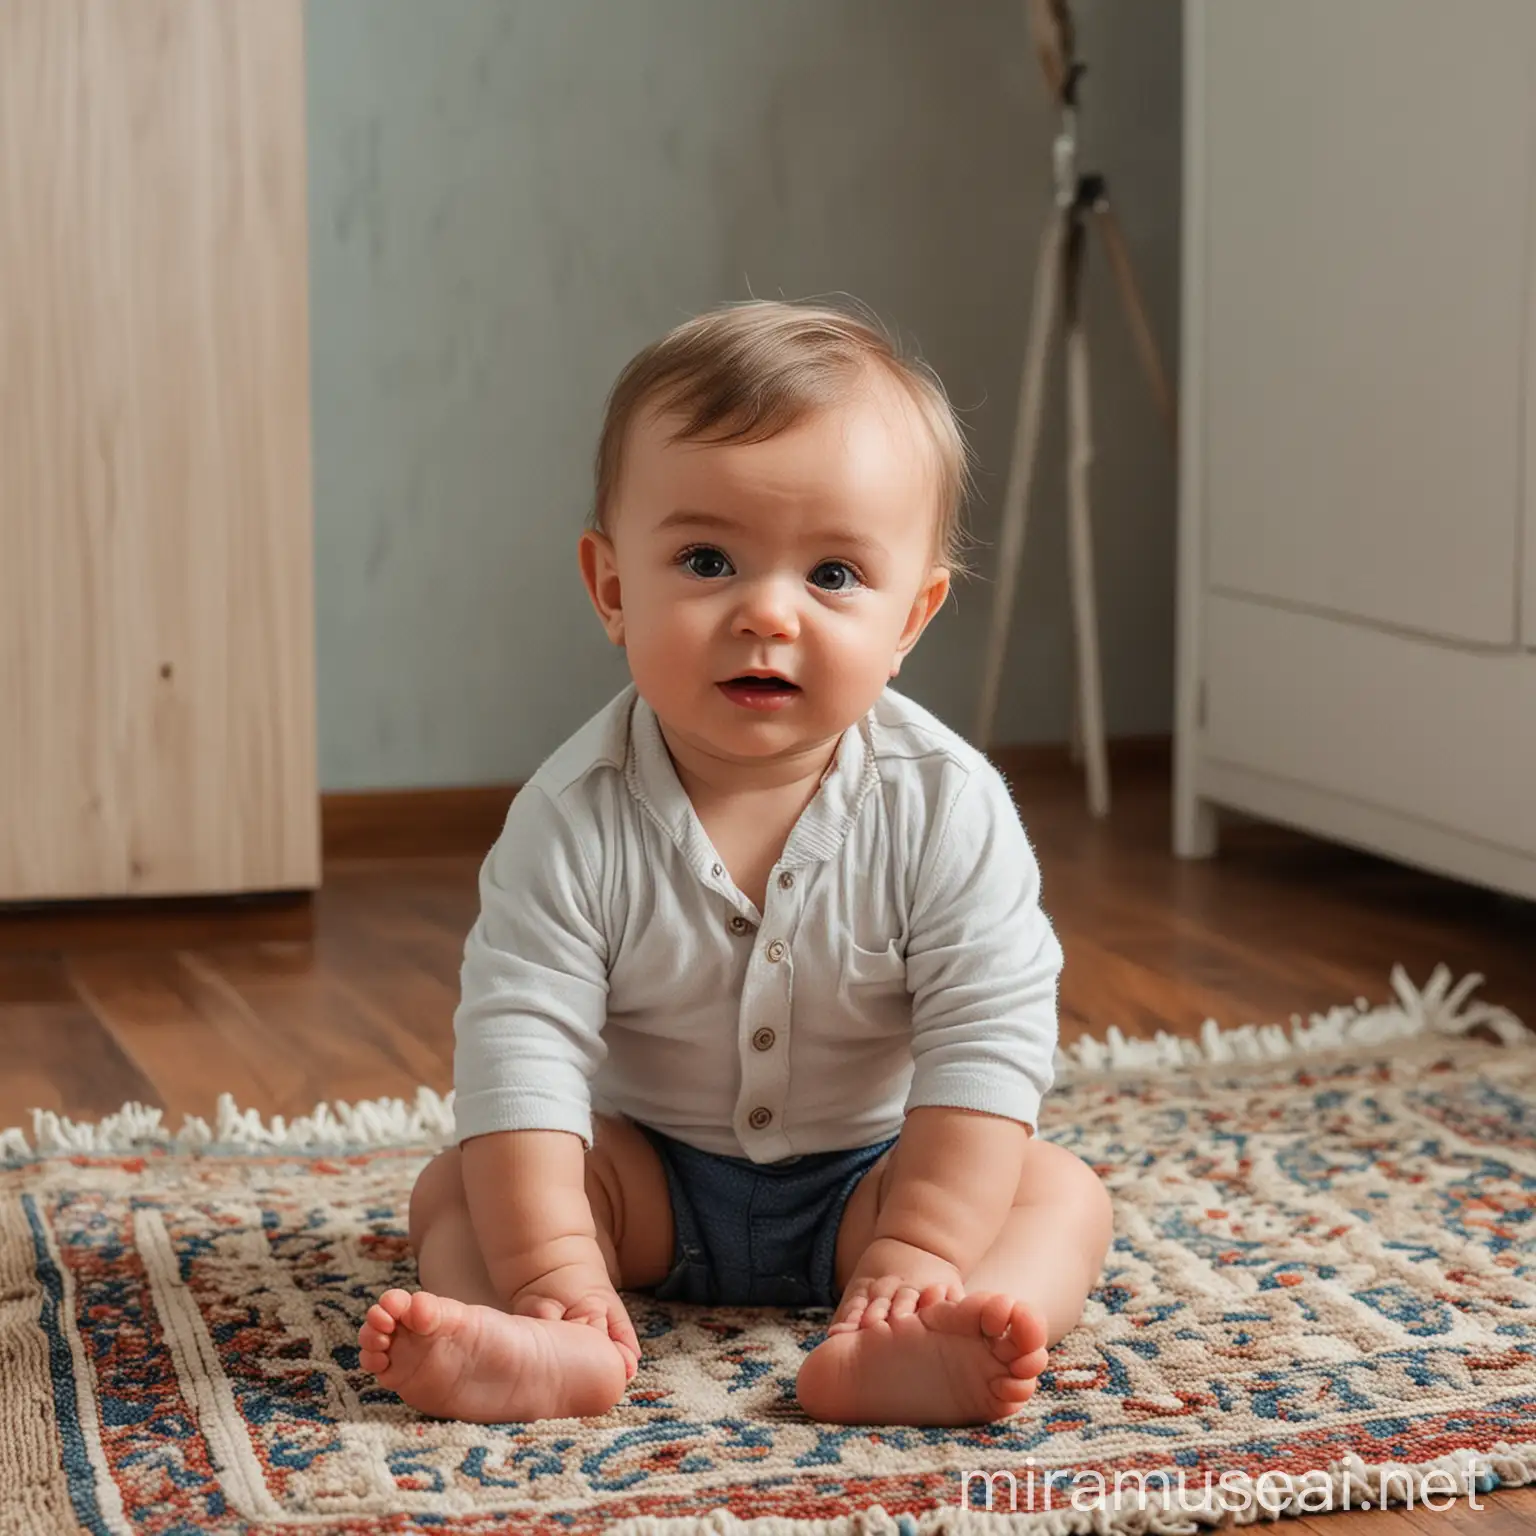 Adorable Baby Boy Sitting on Rug Portrait